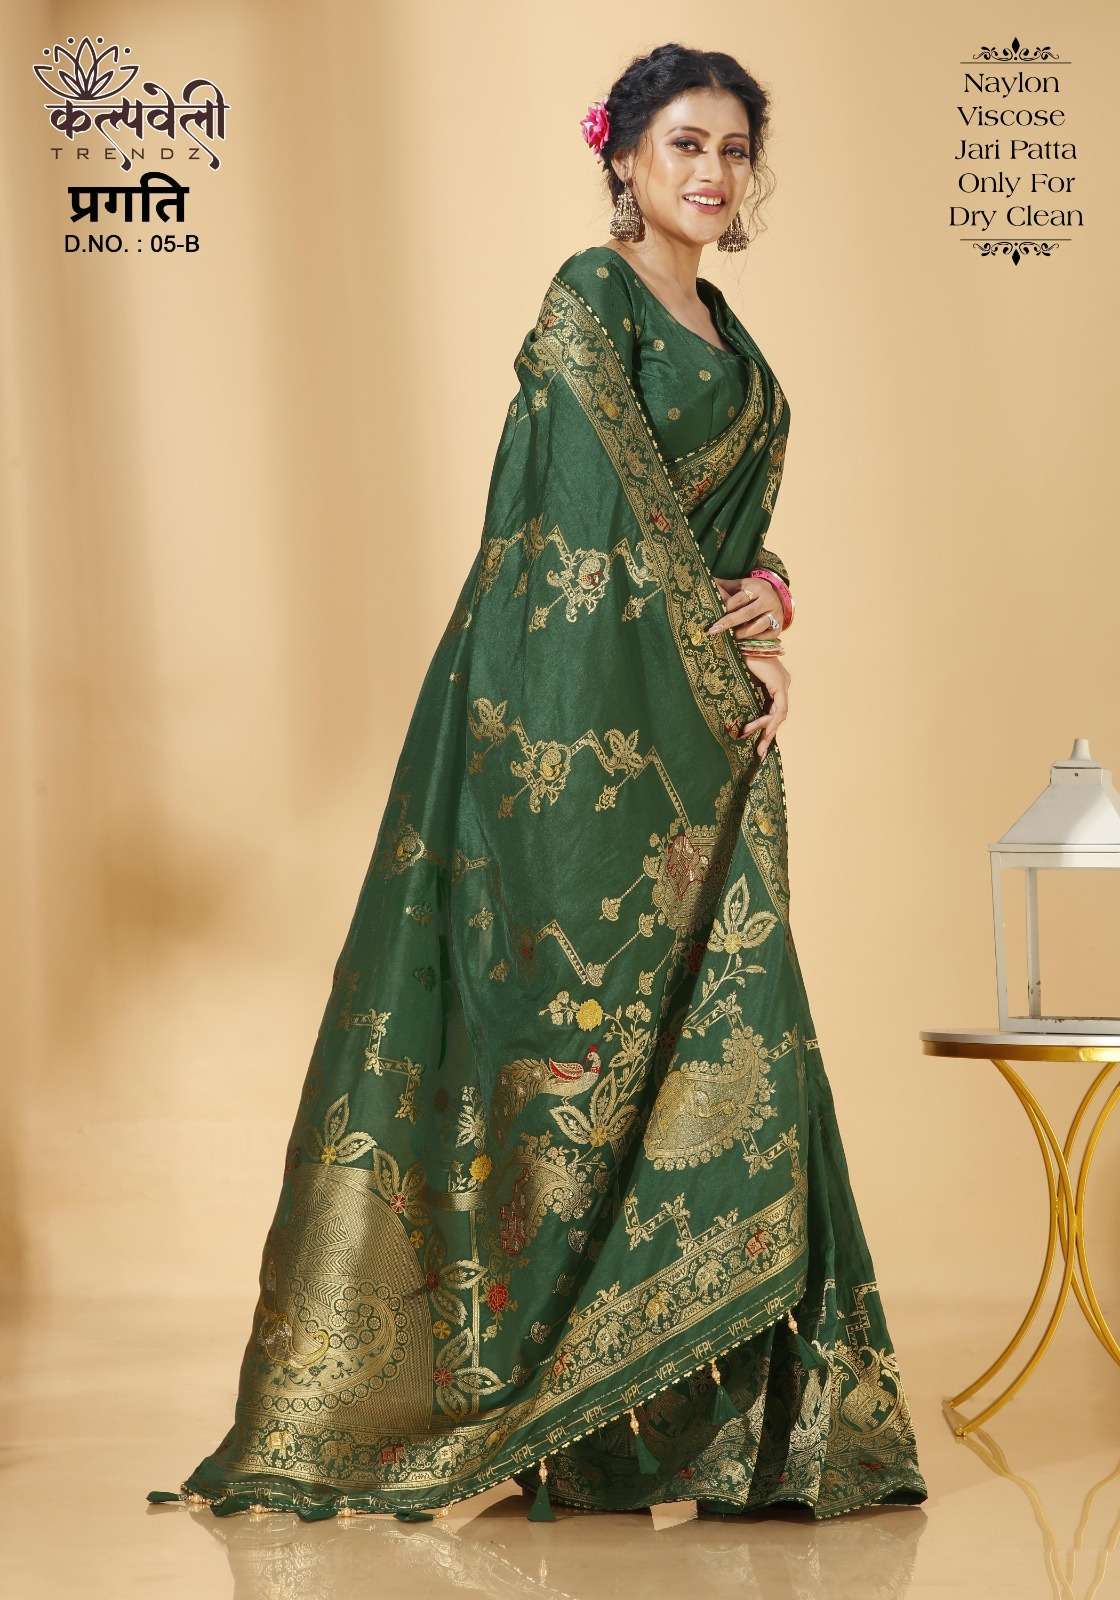 kalpavelly trendz pragati 05 festive wear nylon viscose saree collection